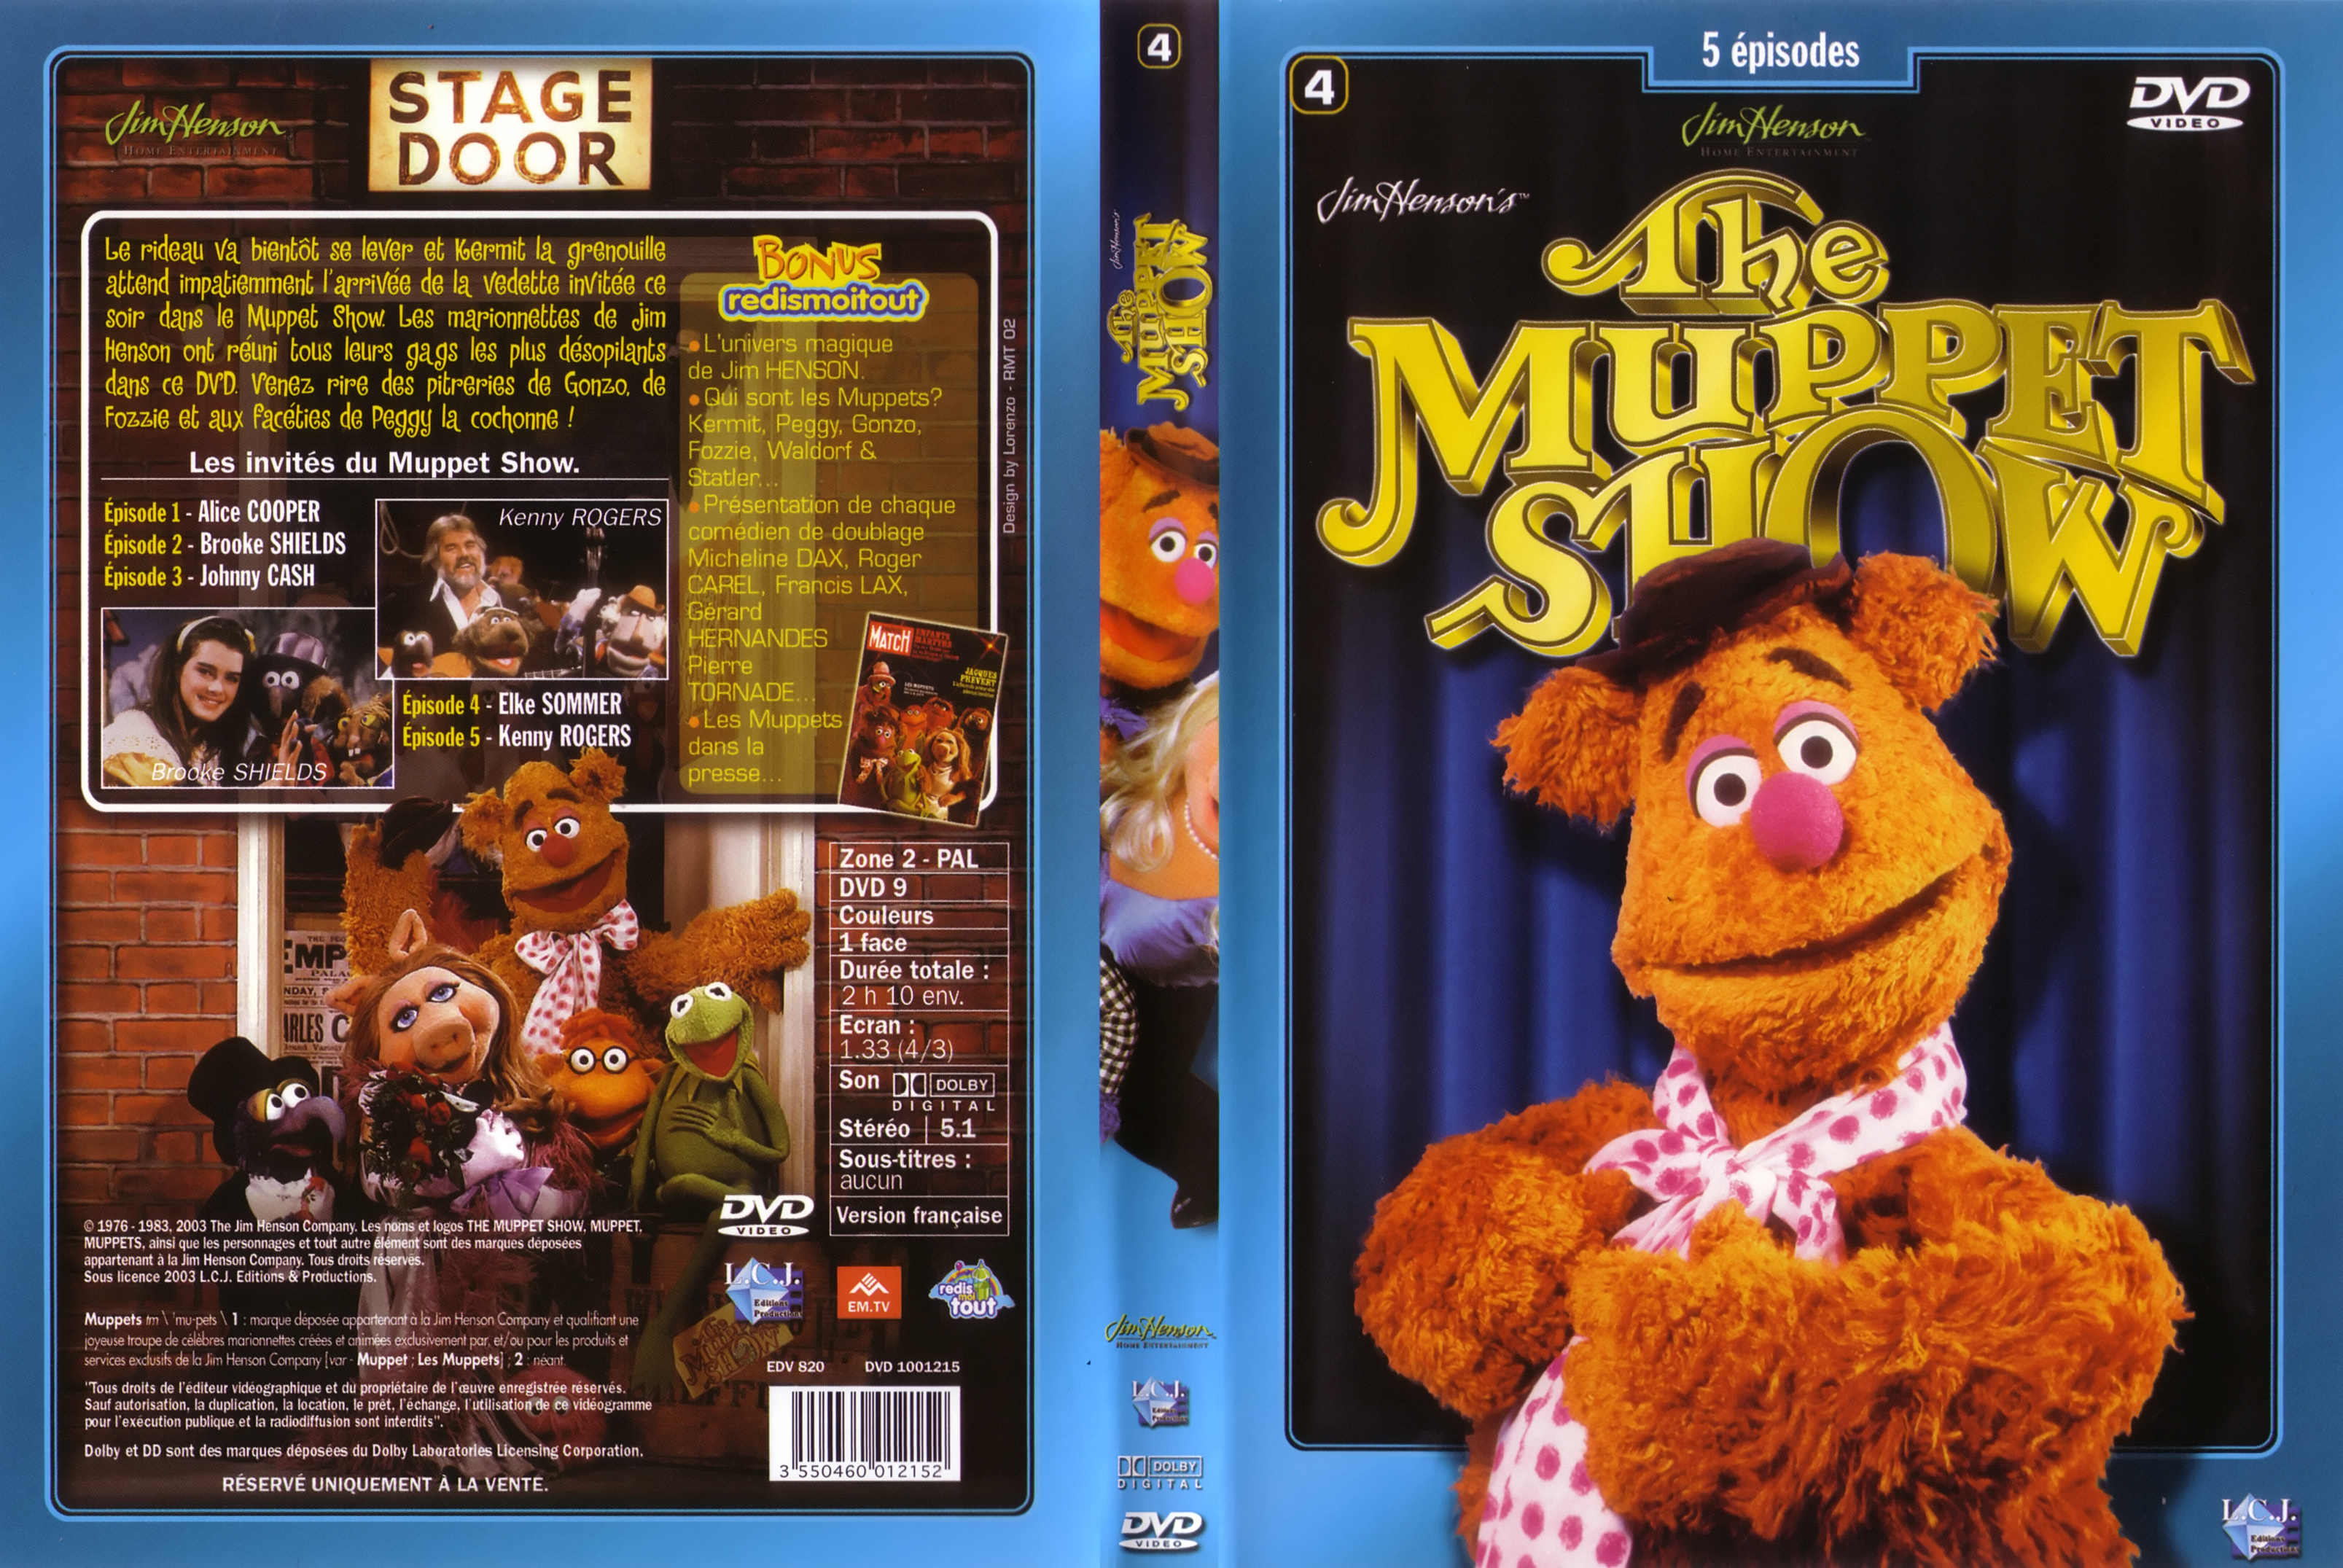 Jaquette DVD The muppet show vol 2 DVD 4